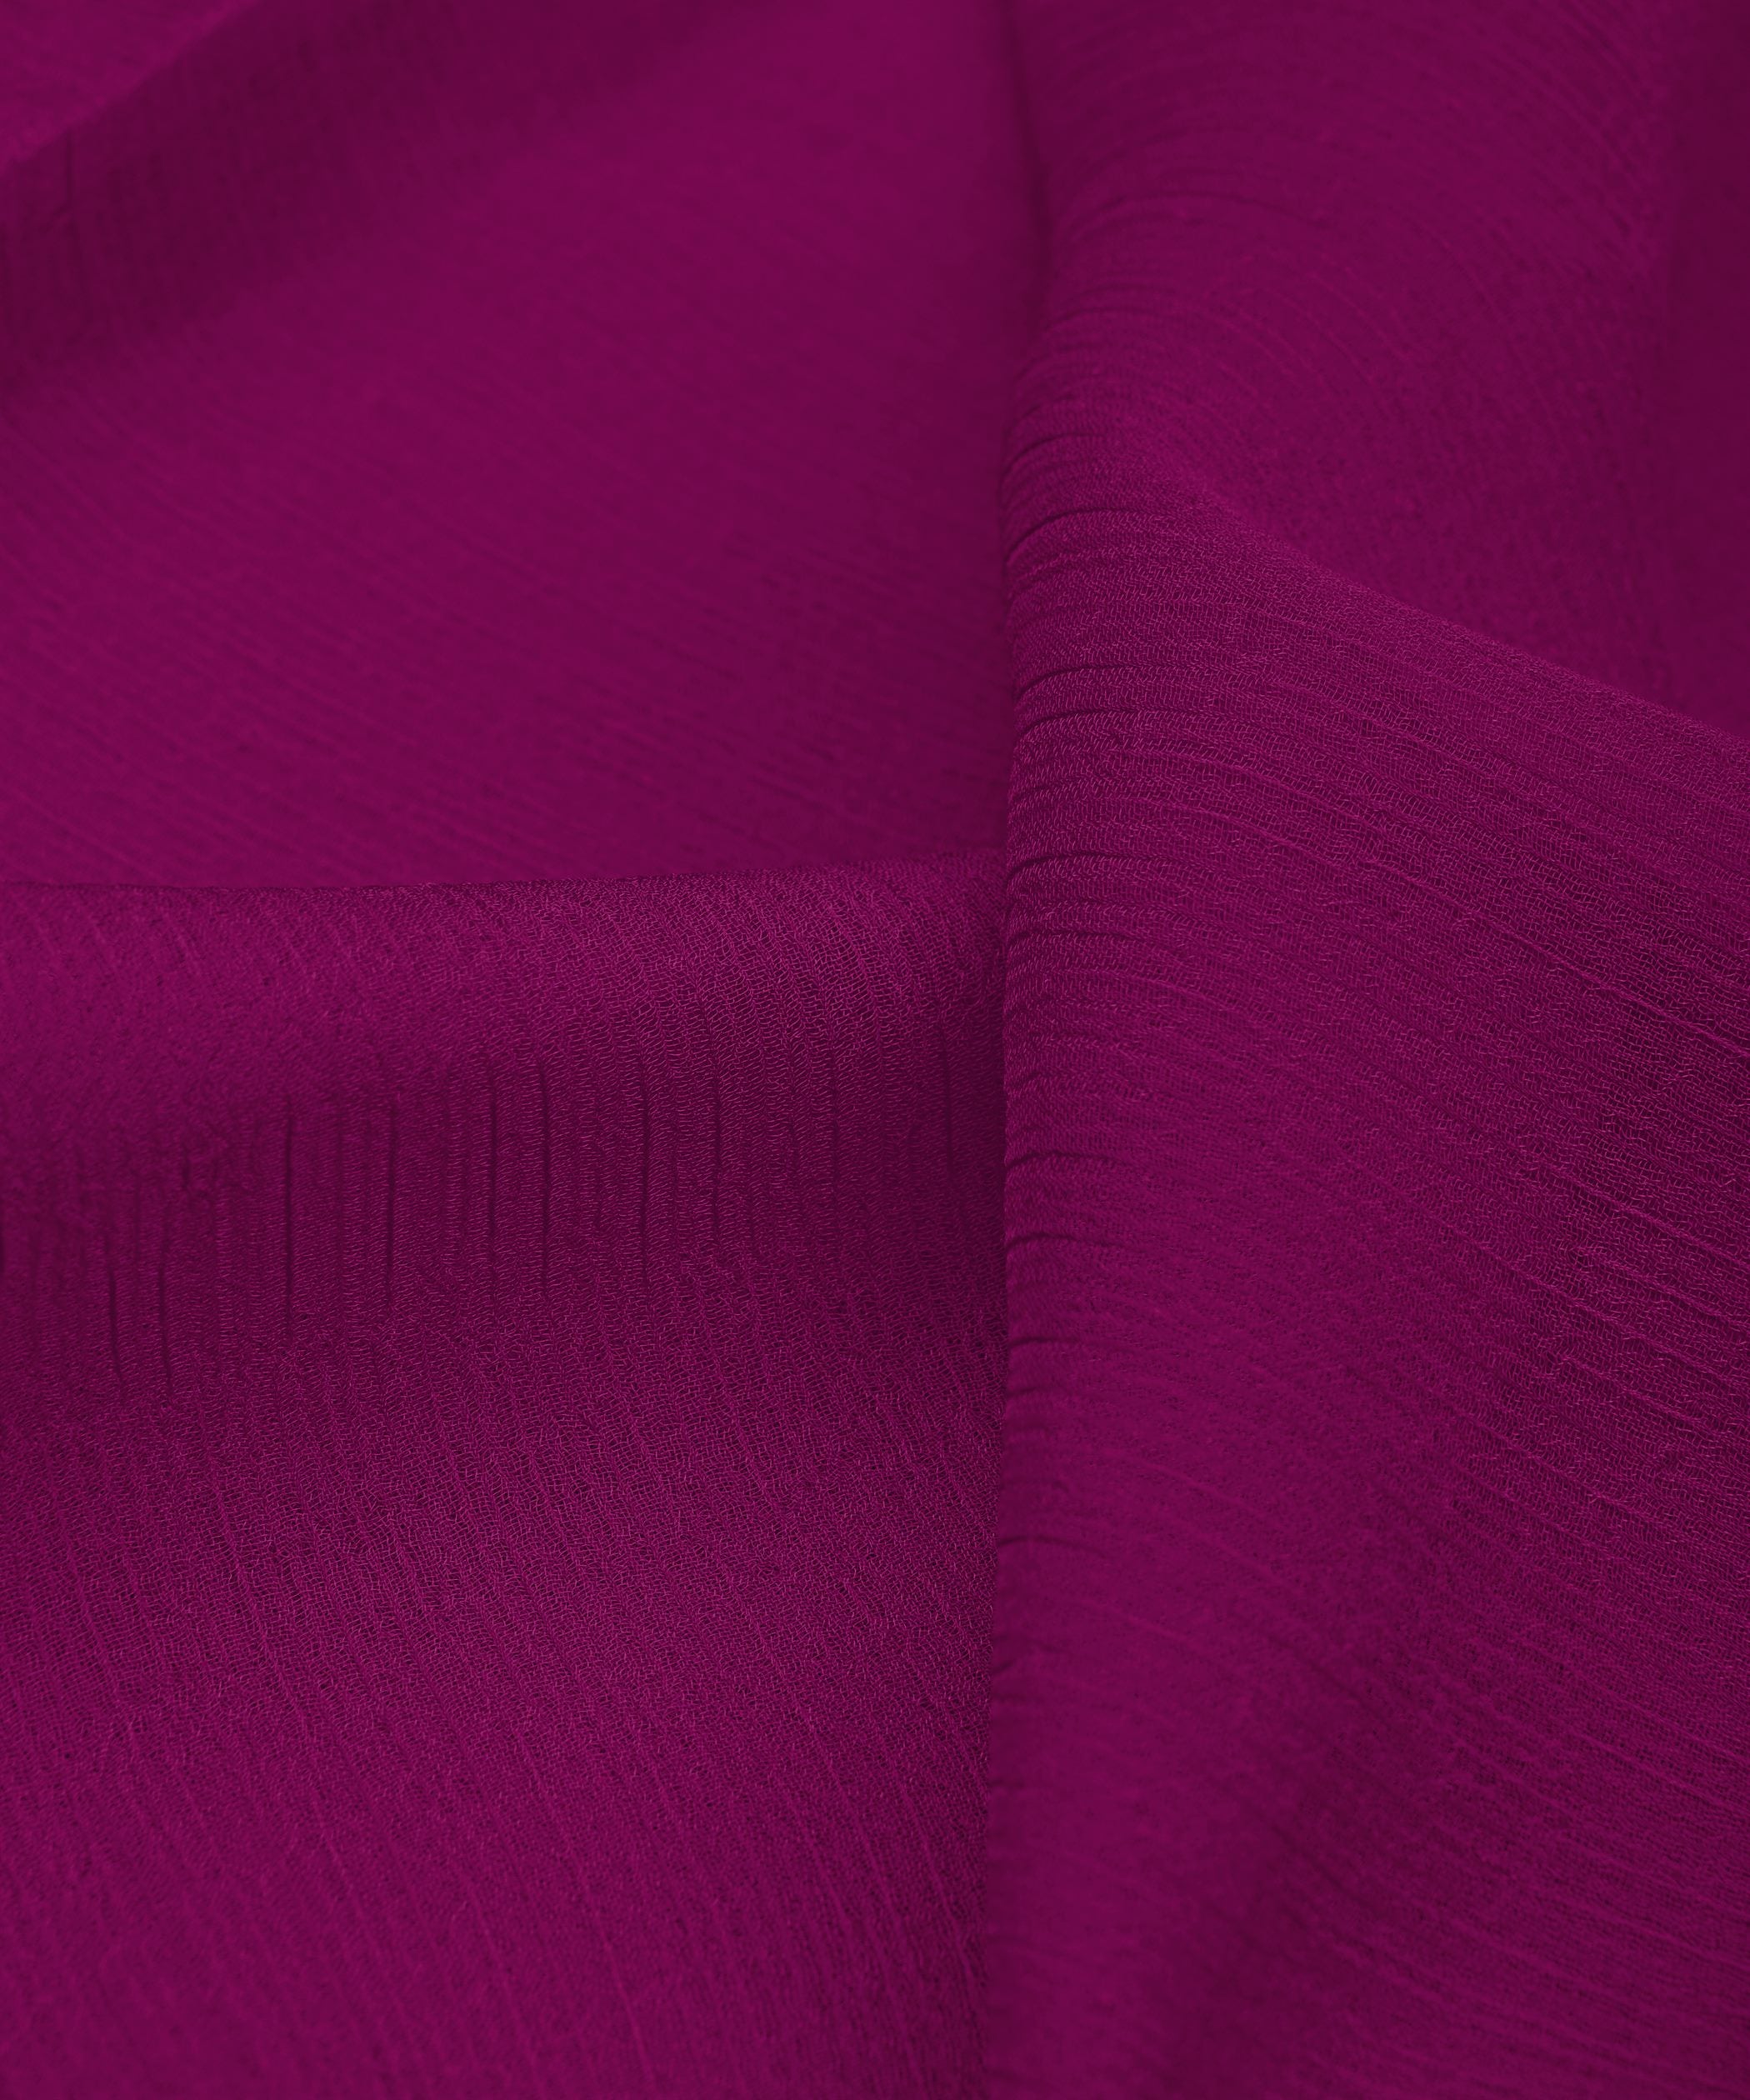 Violet Plain Dyed Bemberg Chiffon Fabric